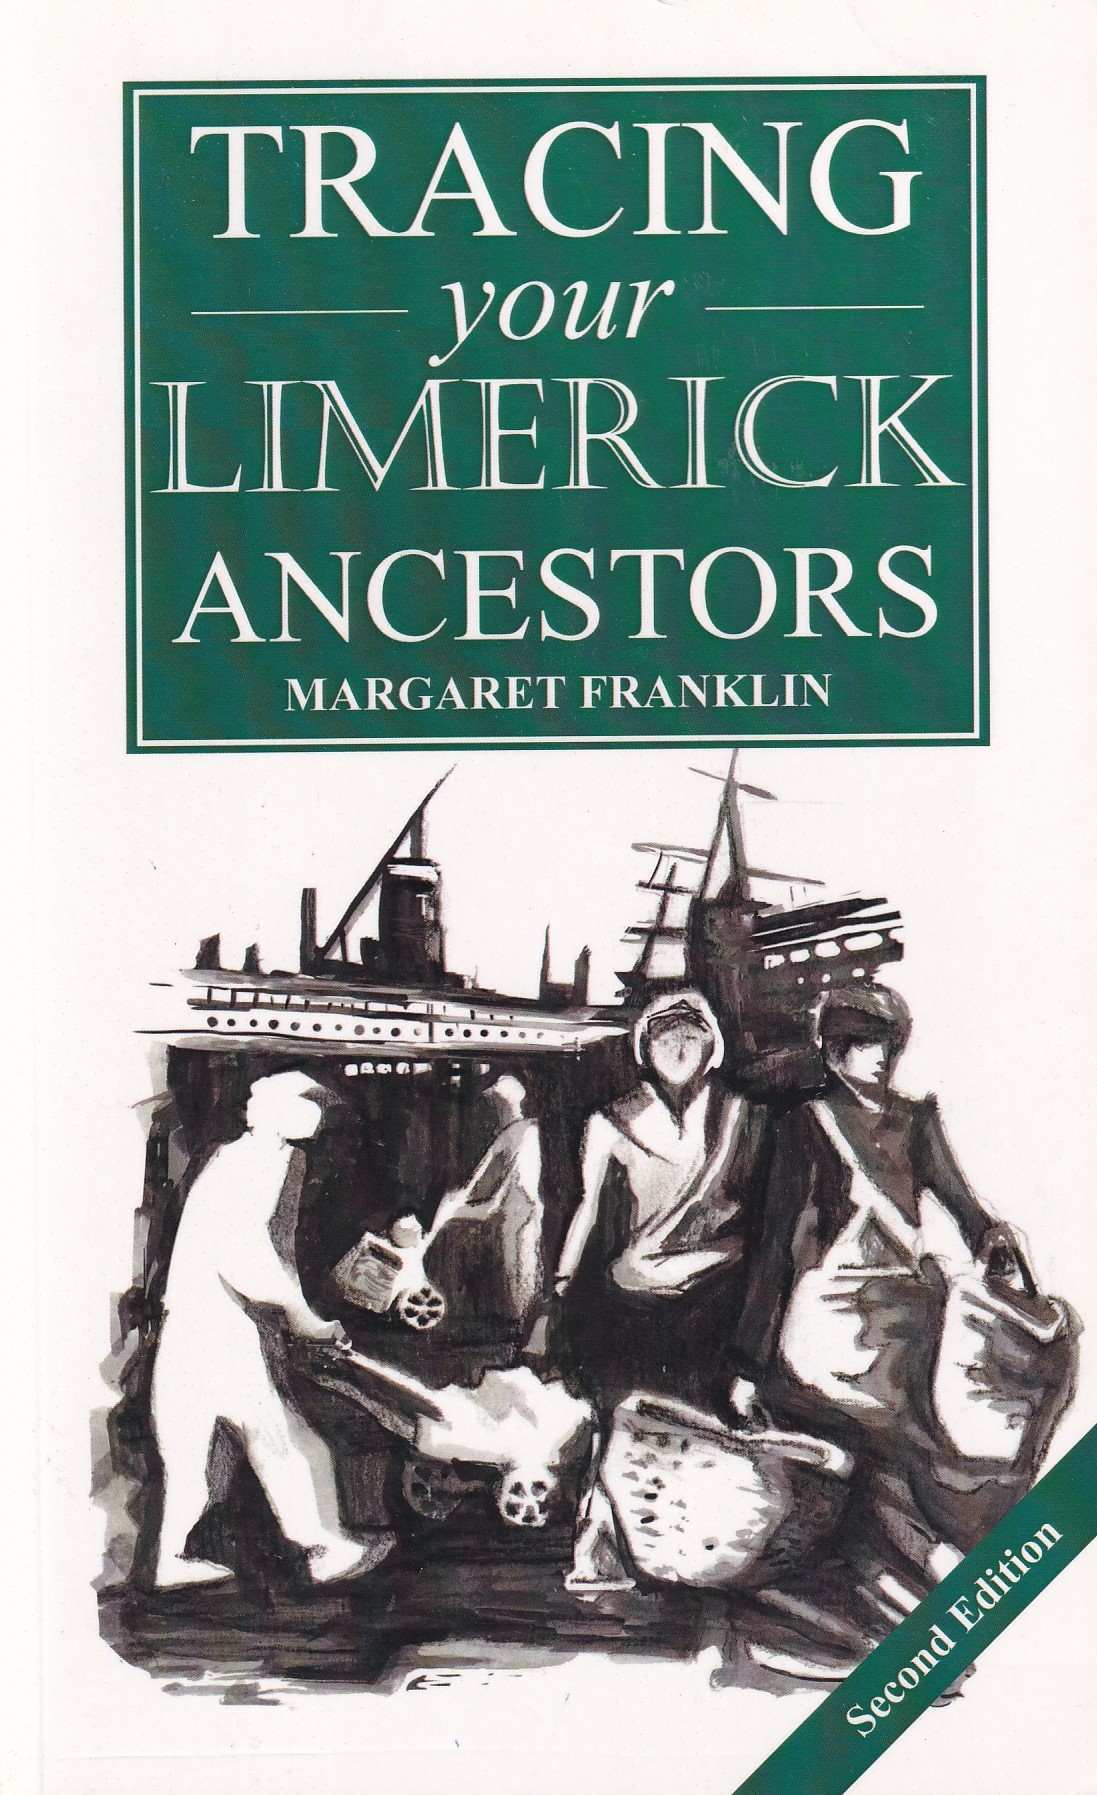 Tracing your Limerick Ancestors by Margaret Franklin